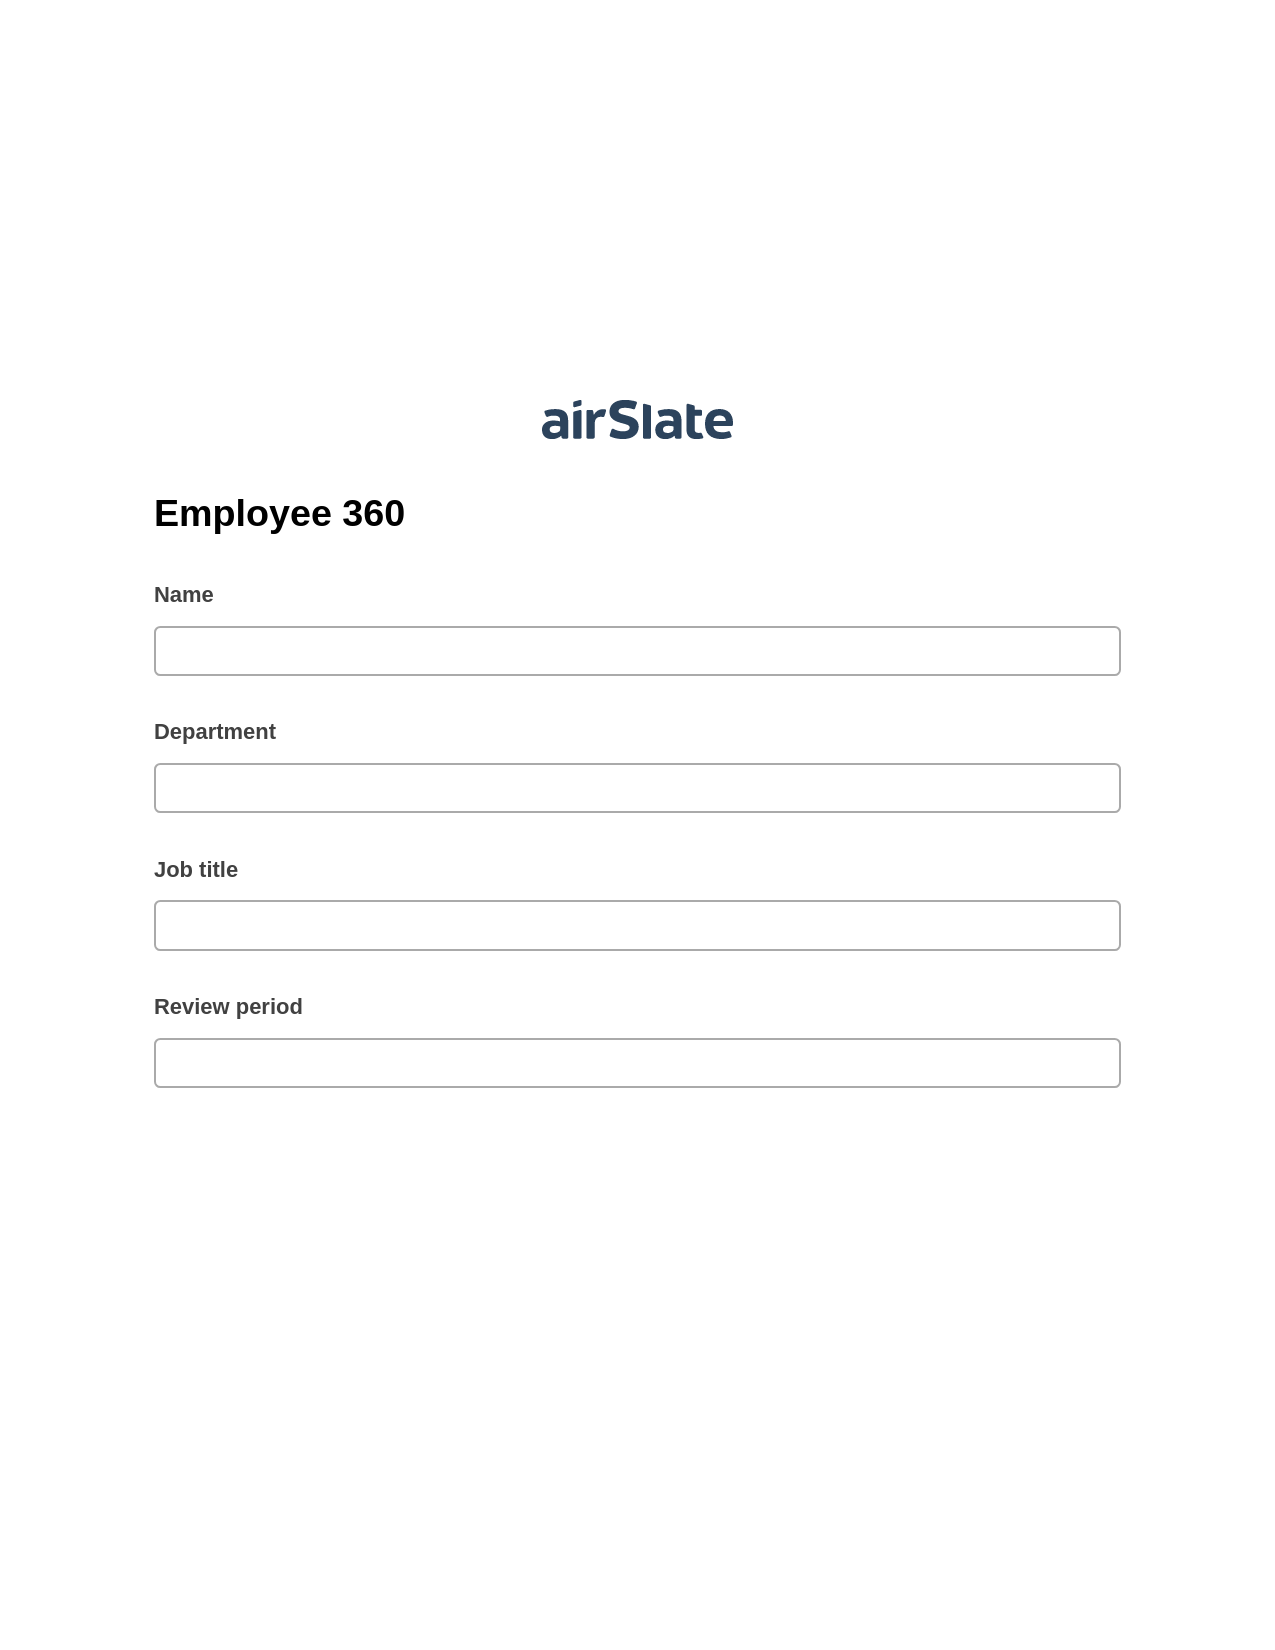 Multirole Employee 360 Pre-fill from another Slate Bot, Invoke Salesforce Process Bot, Archive to Box Bot